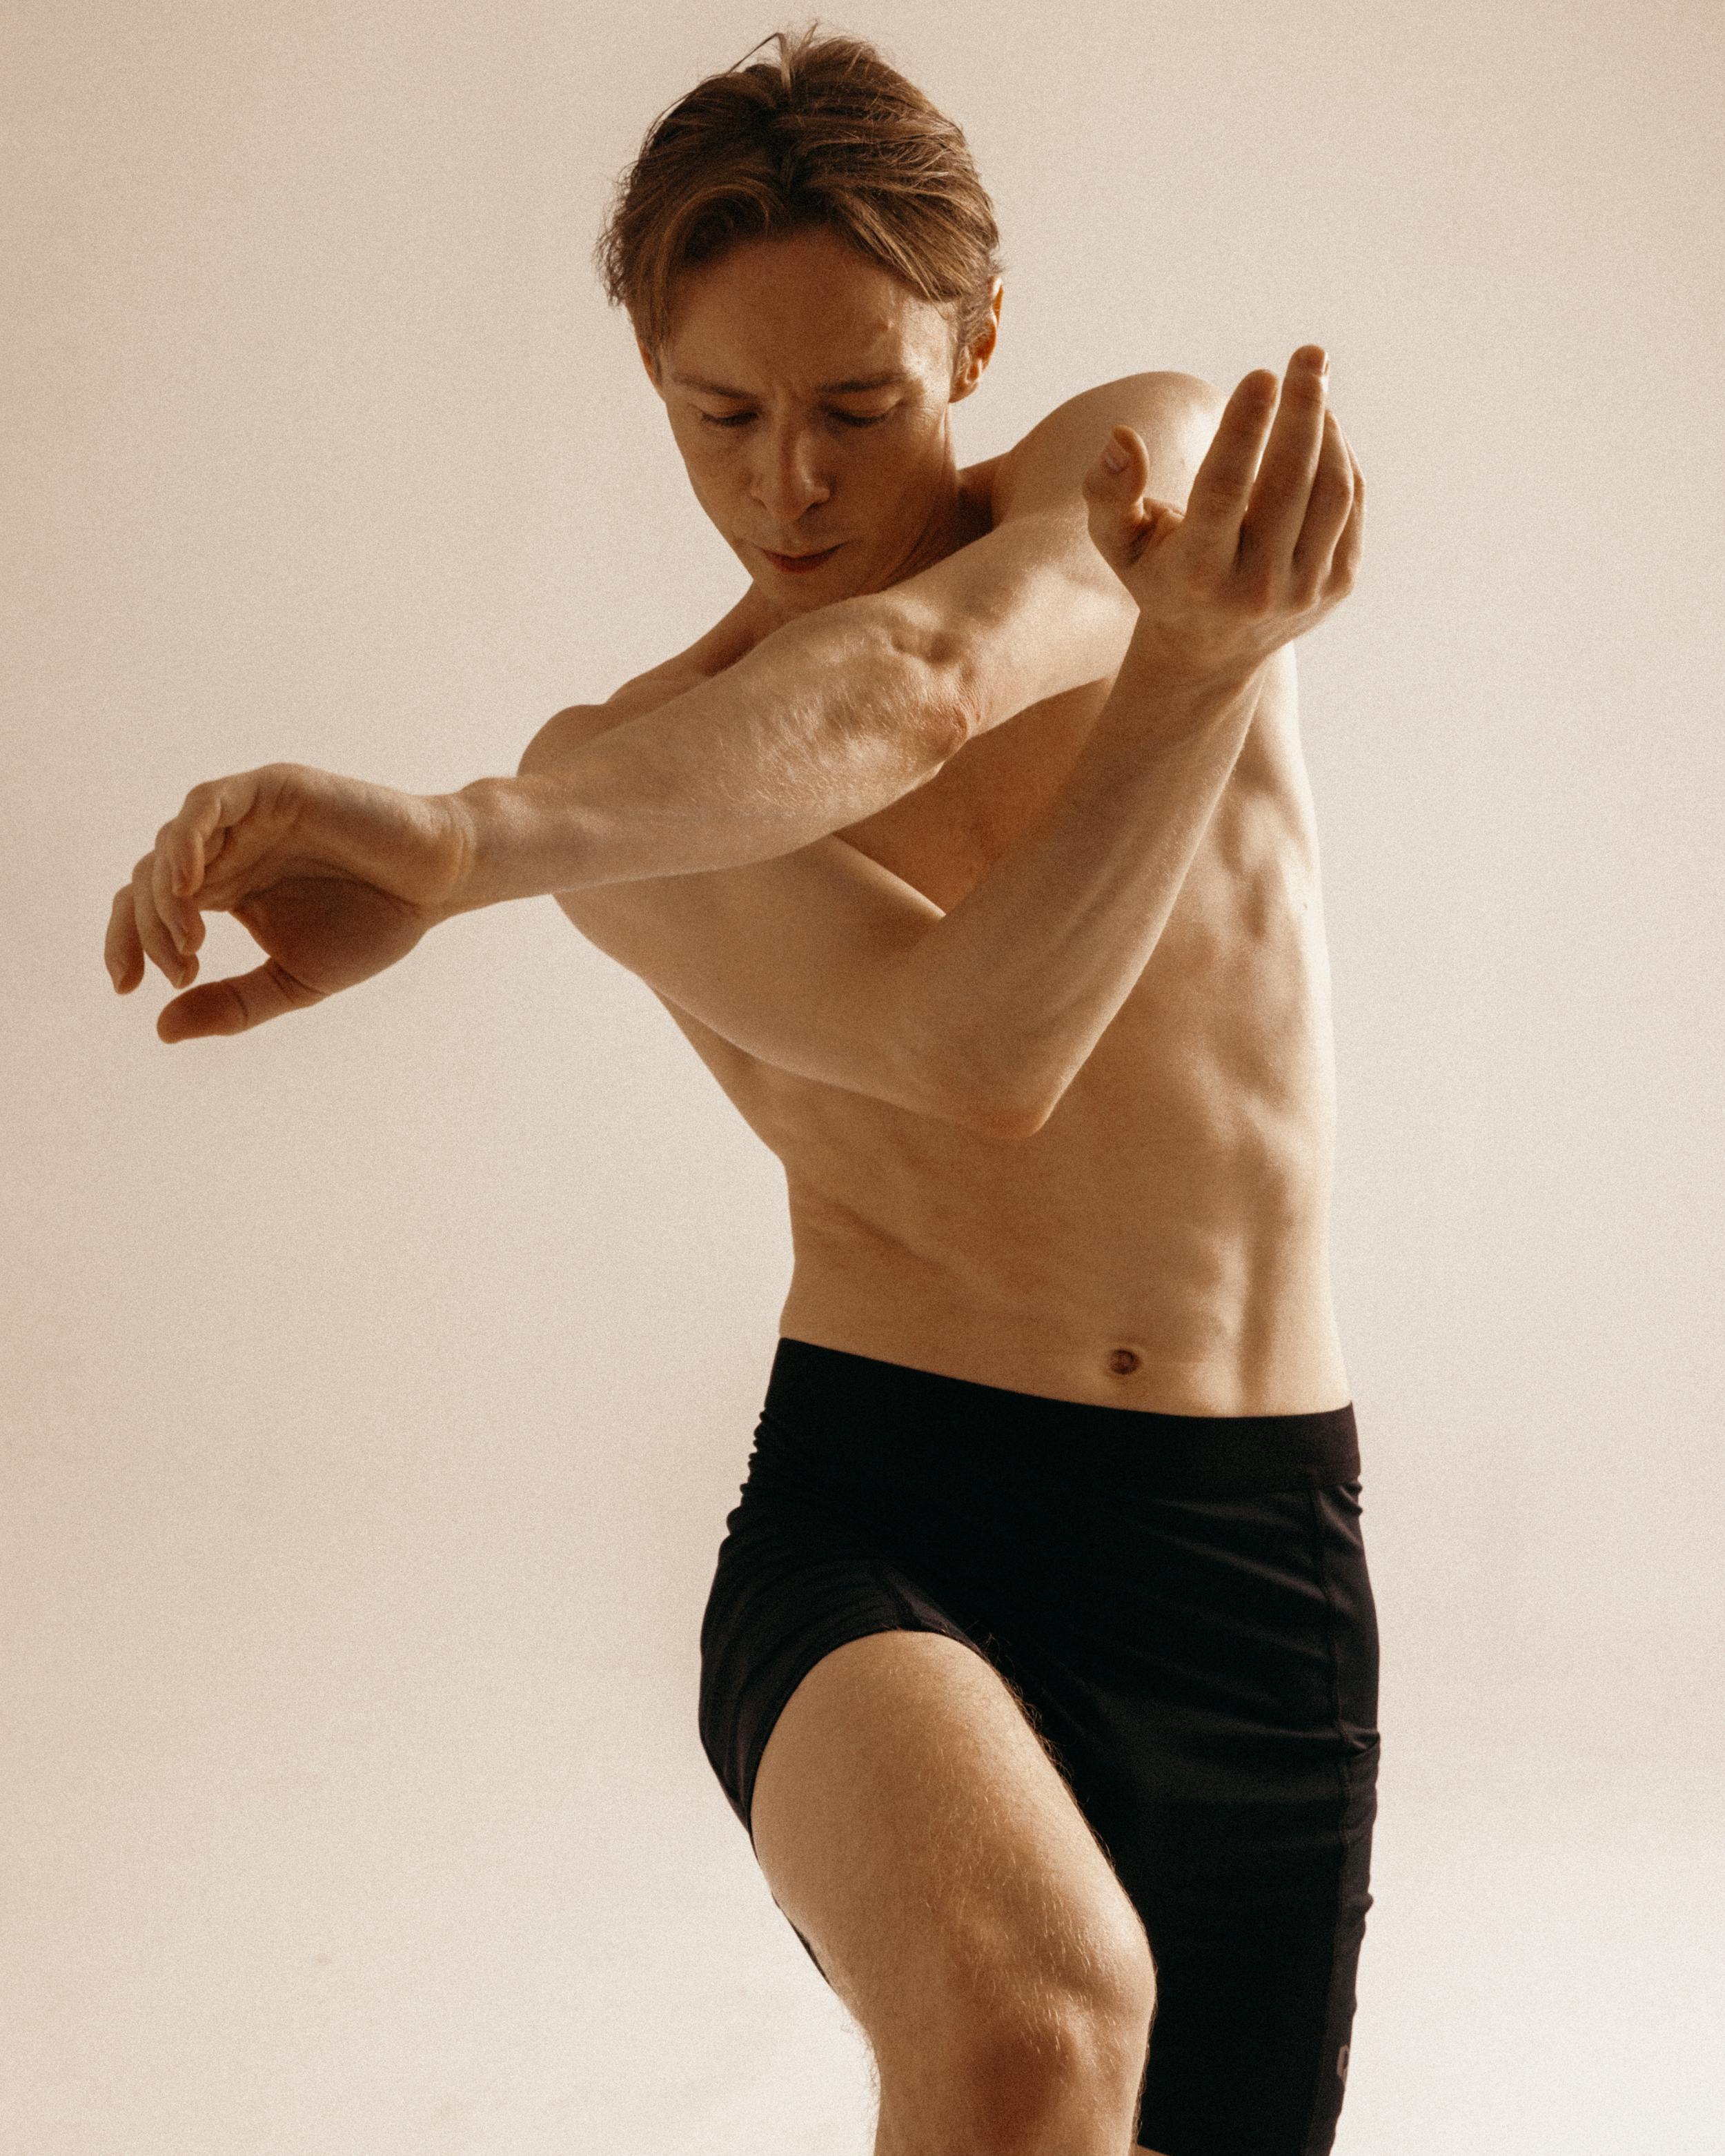 Daniil Simkin Male Ballet Dancer